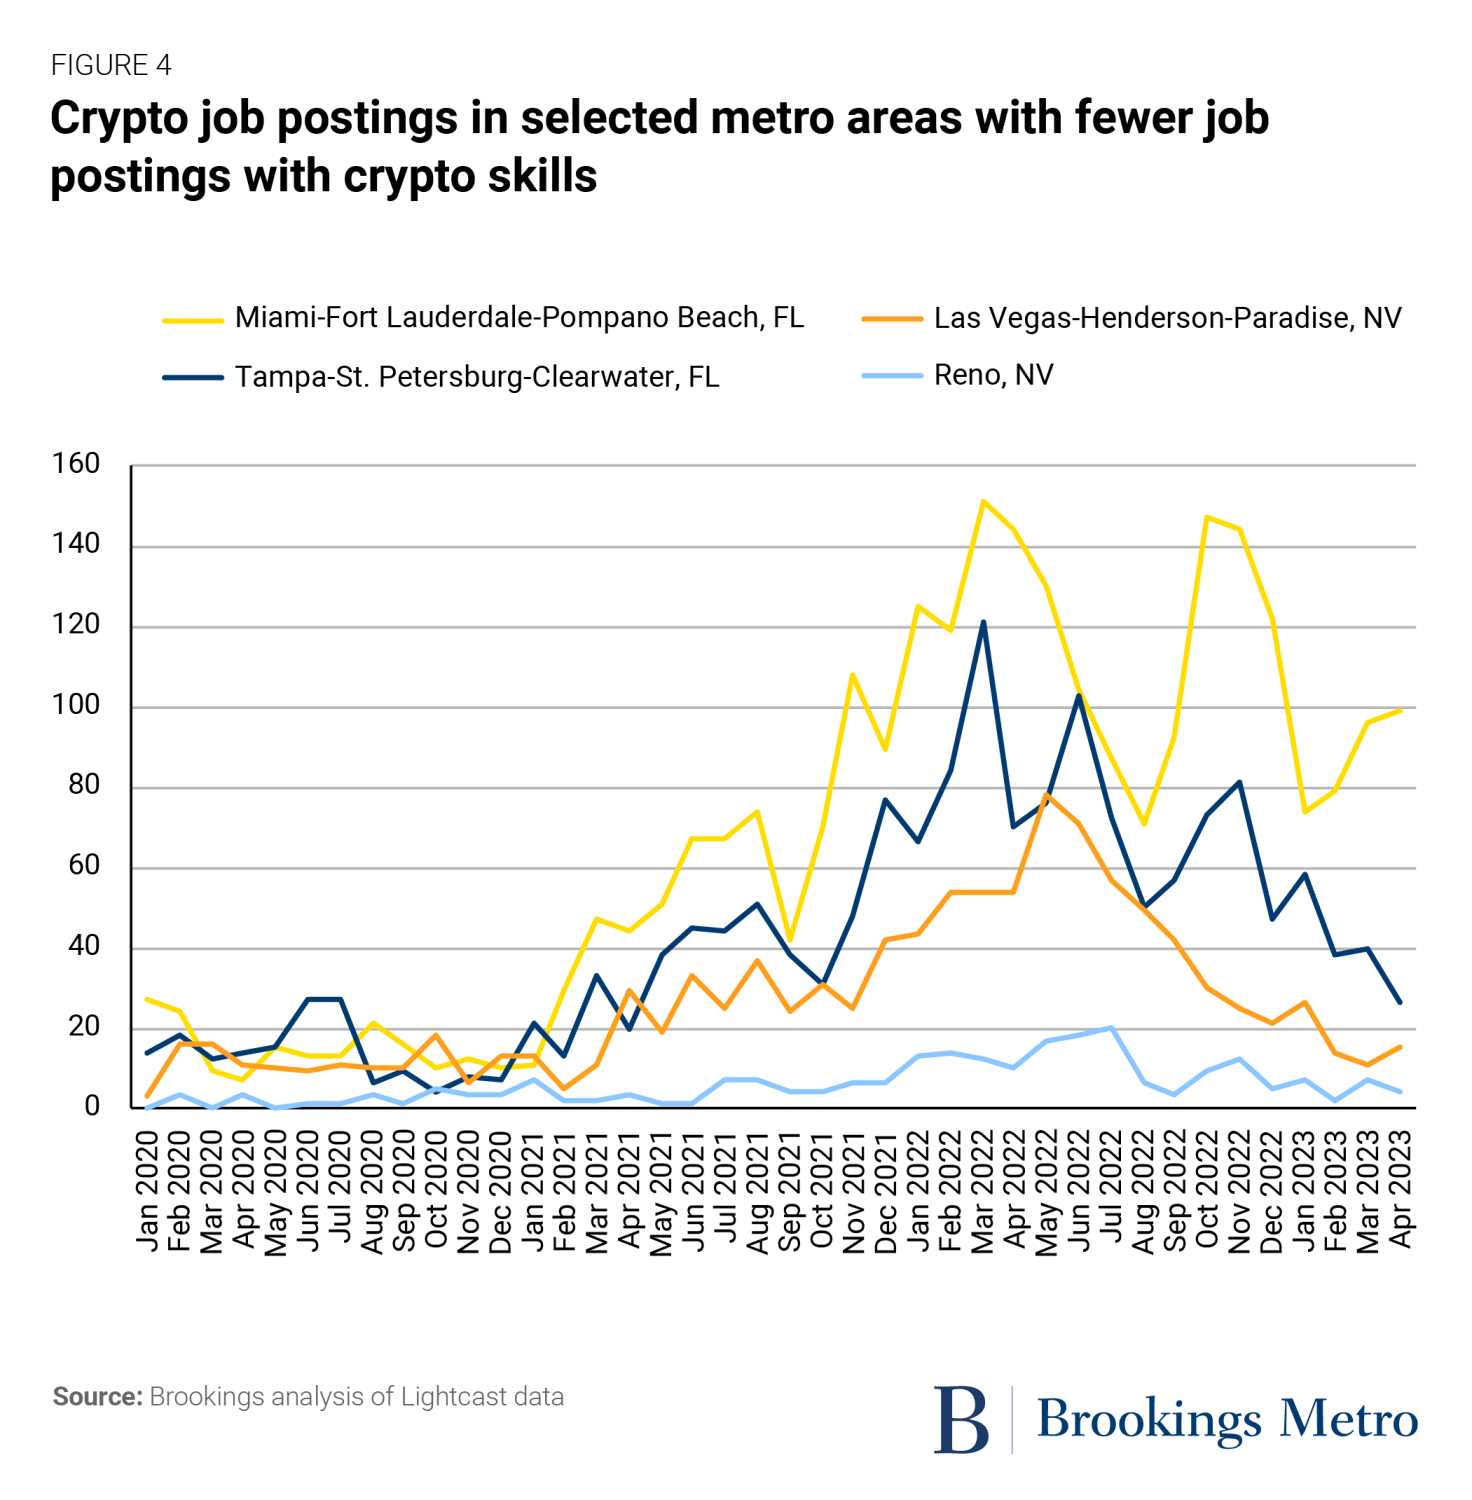 Figure 4. Crypto job postings in selected metro areas with fewer job postings with crypto skills